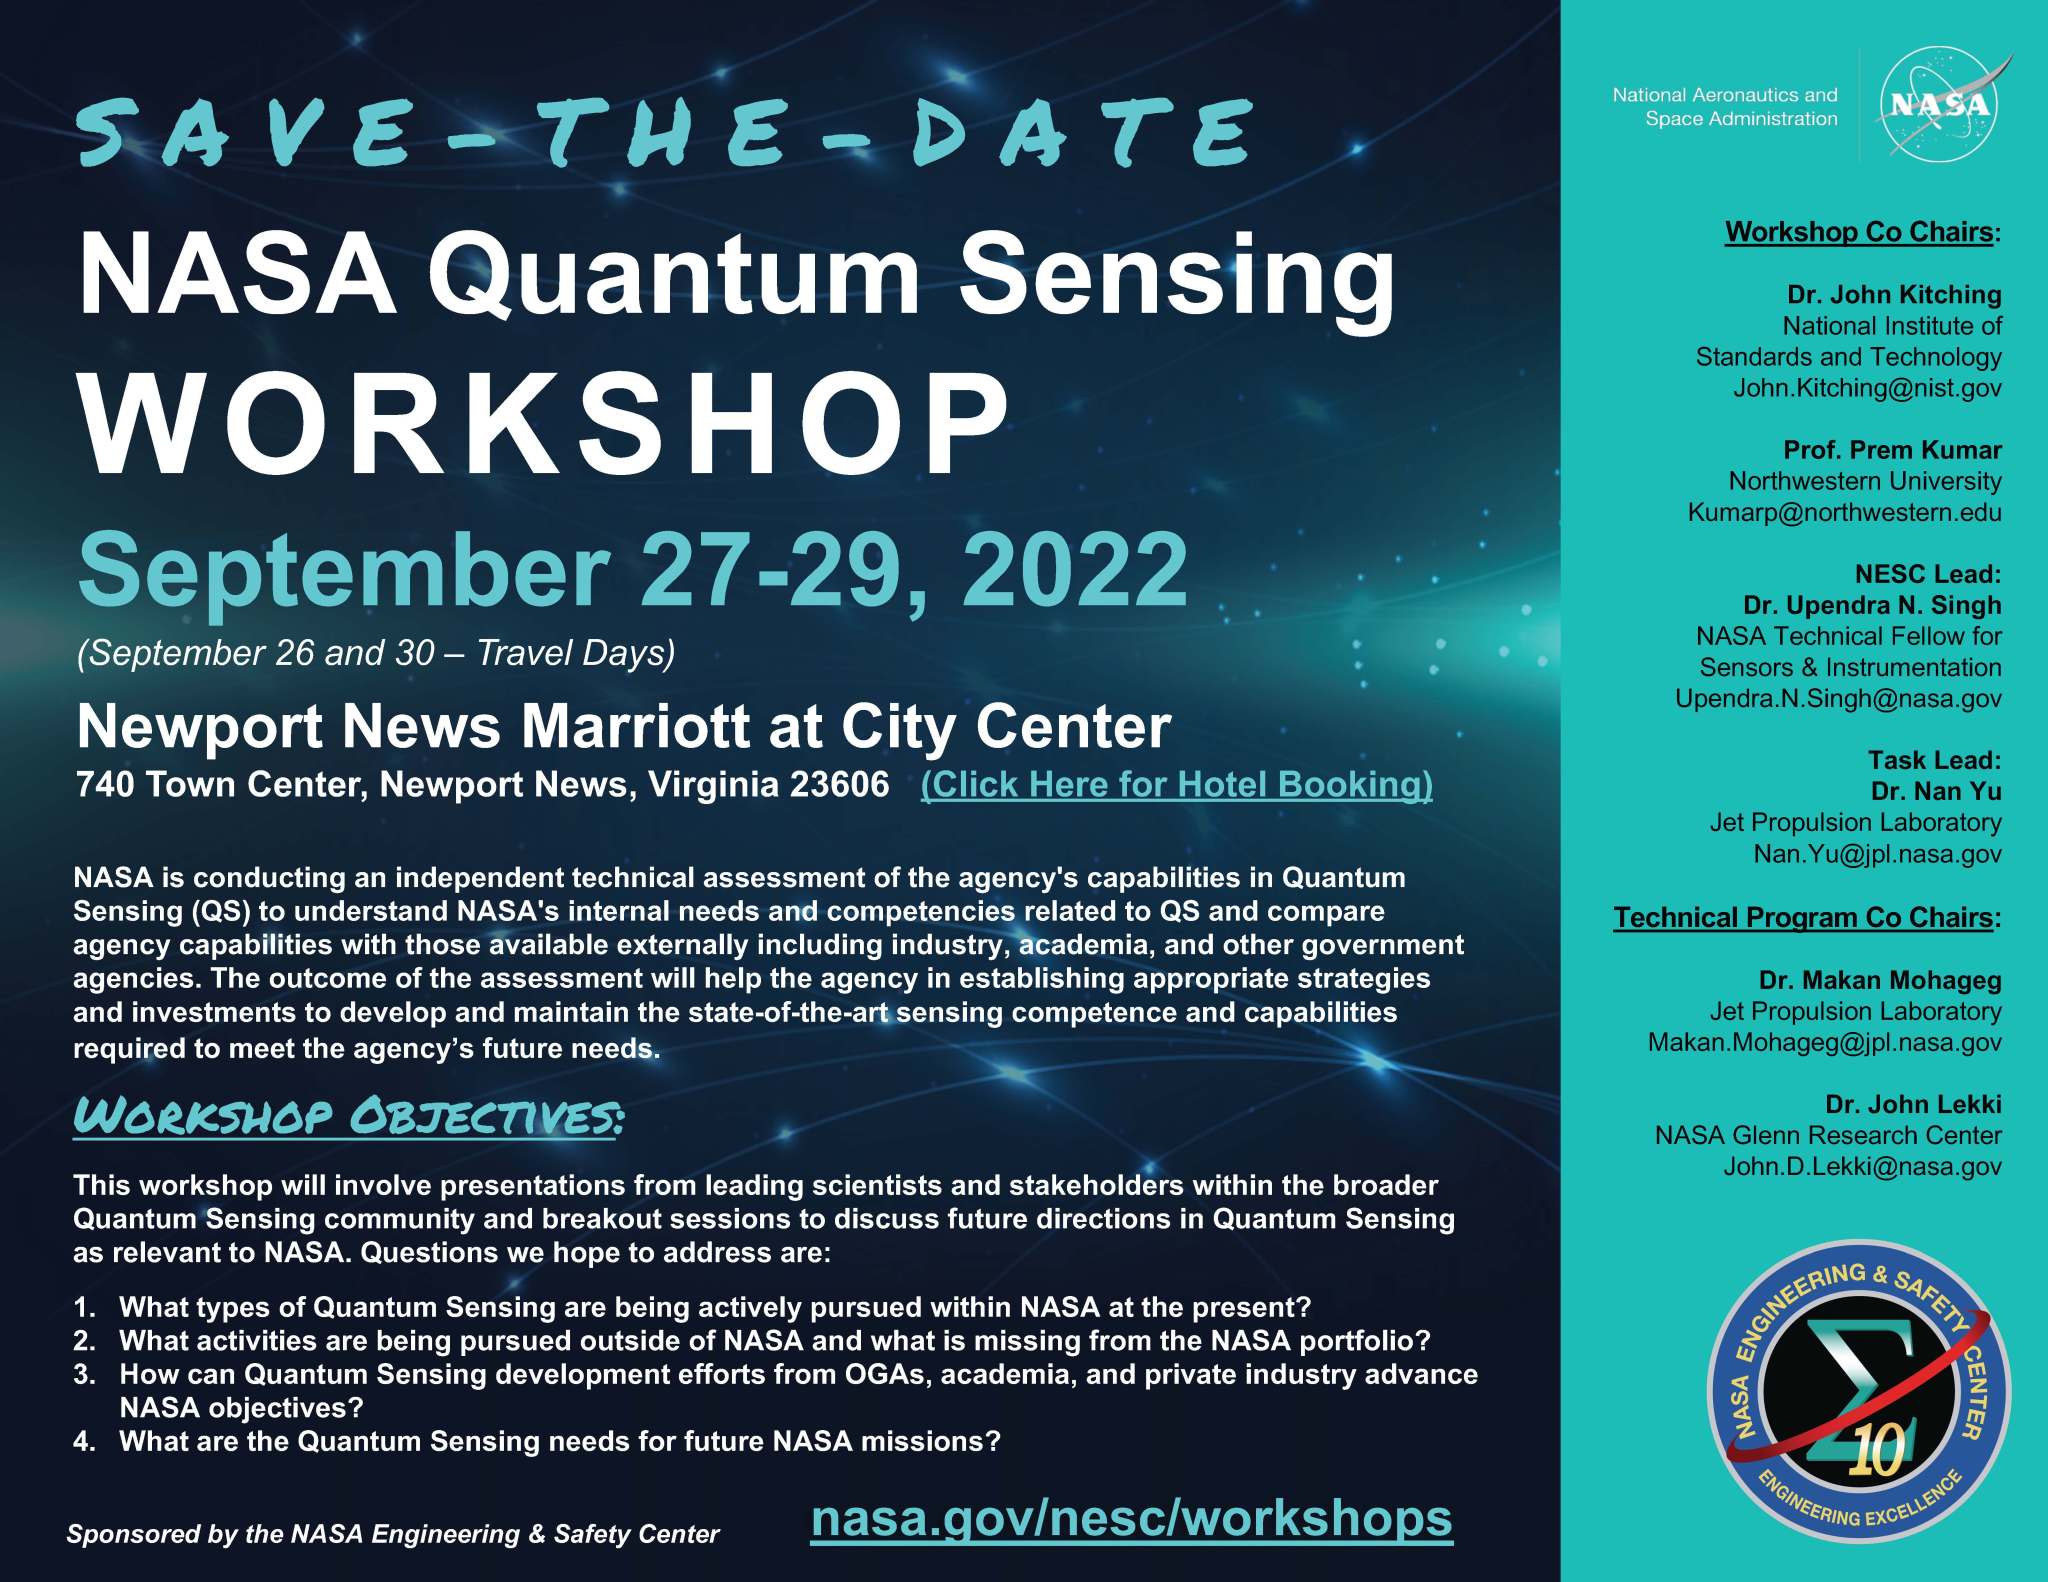 Flyer for the NASA Quantum Sensing Workshop